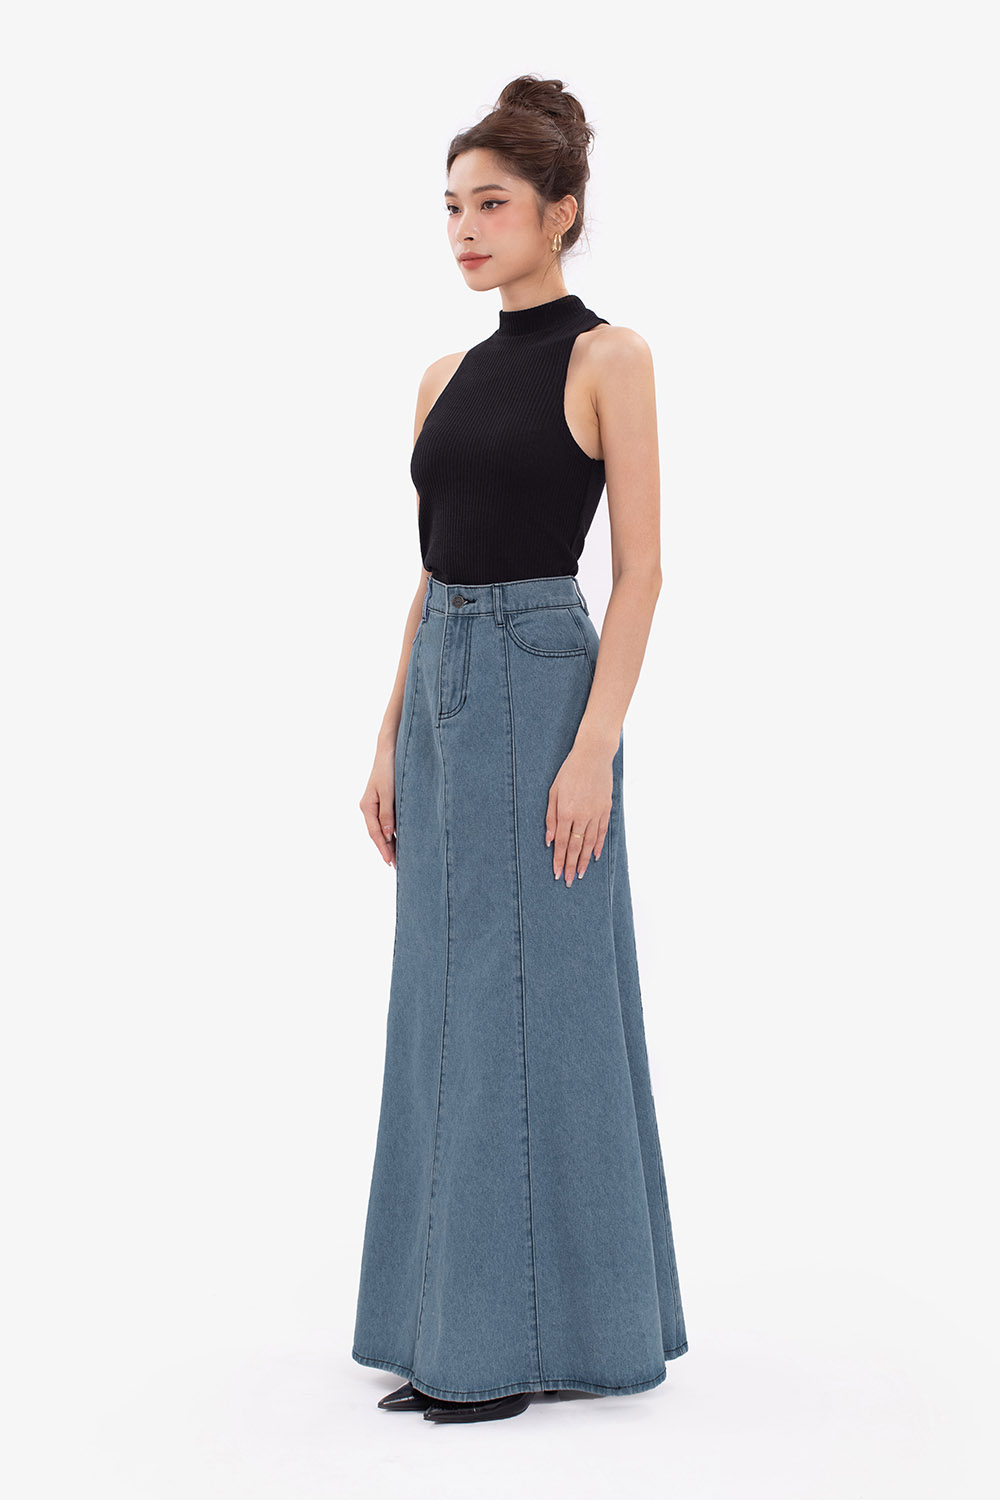 Shop Hau Nguyen · Chân váy jeans CK đai bấm